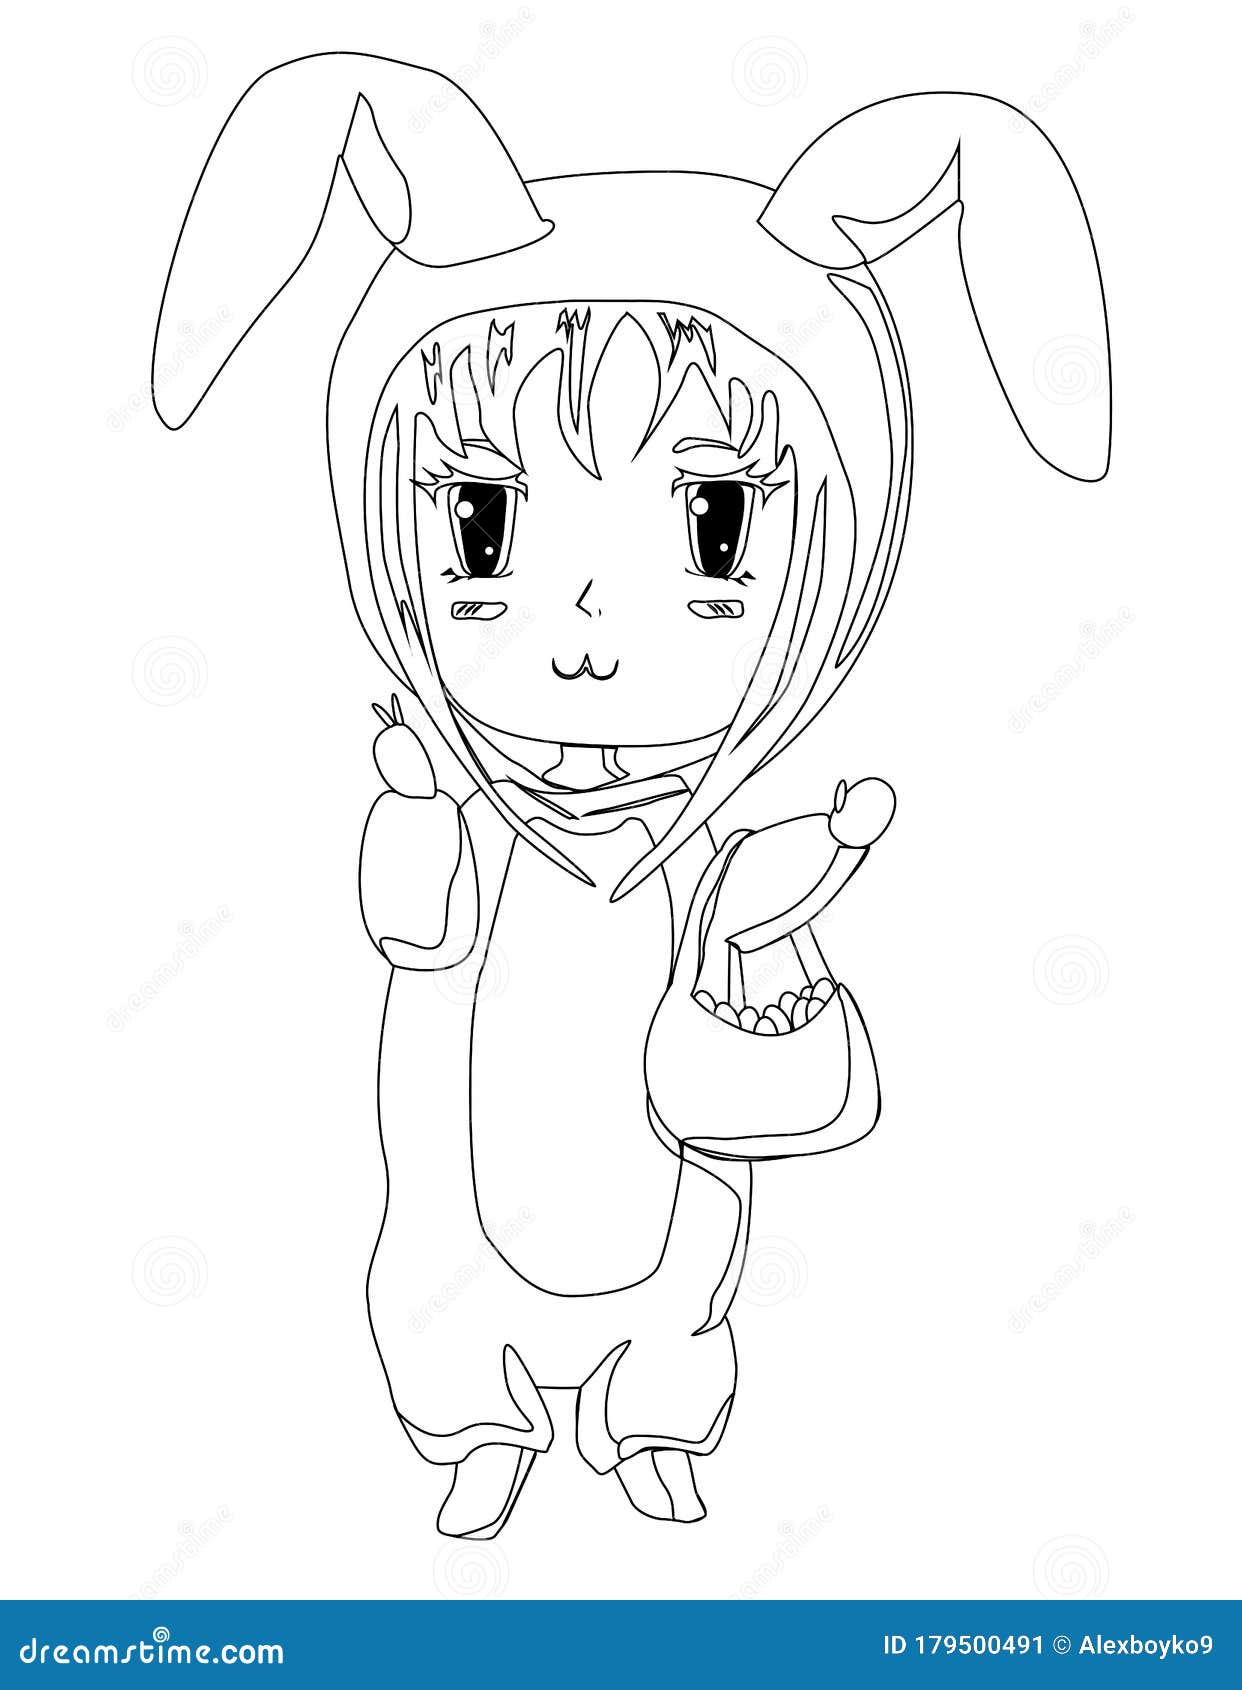 petty-jackal692: kawaii animals Anime coloring book